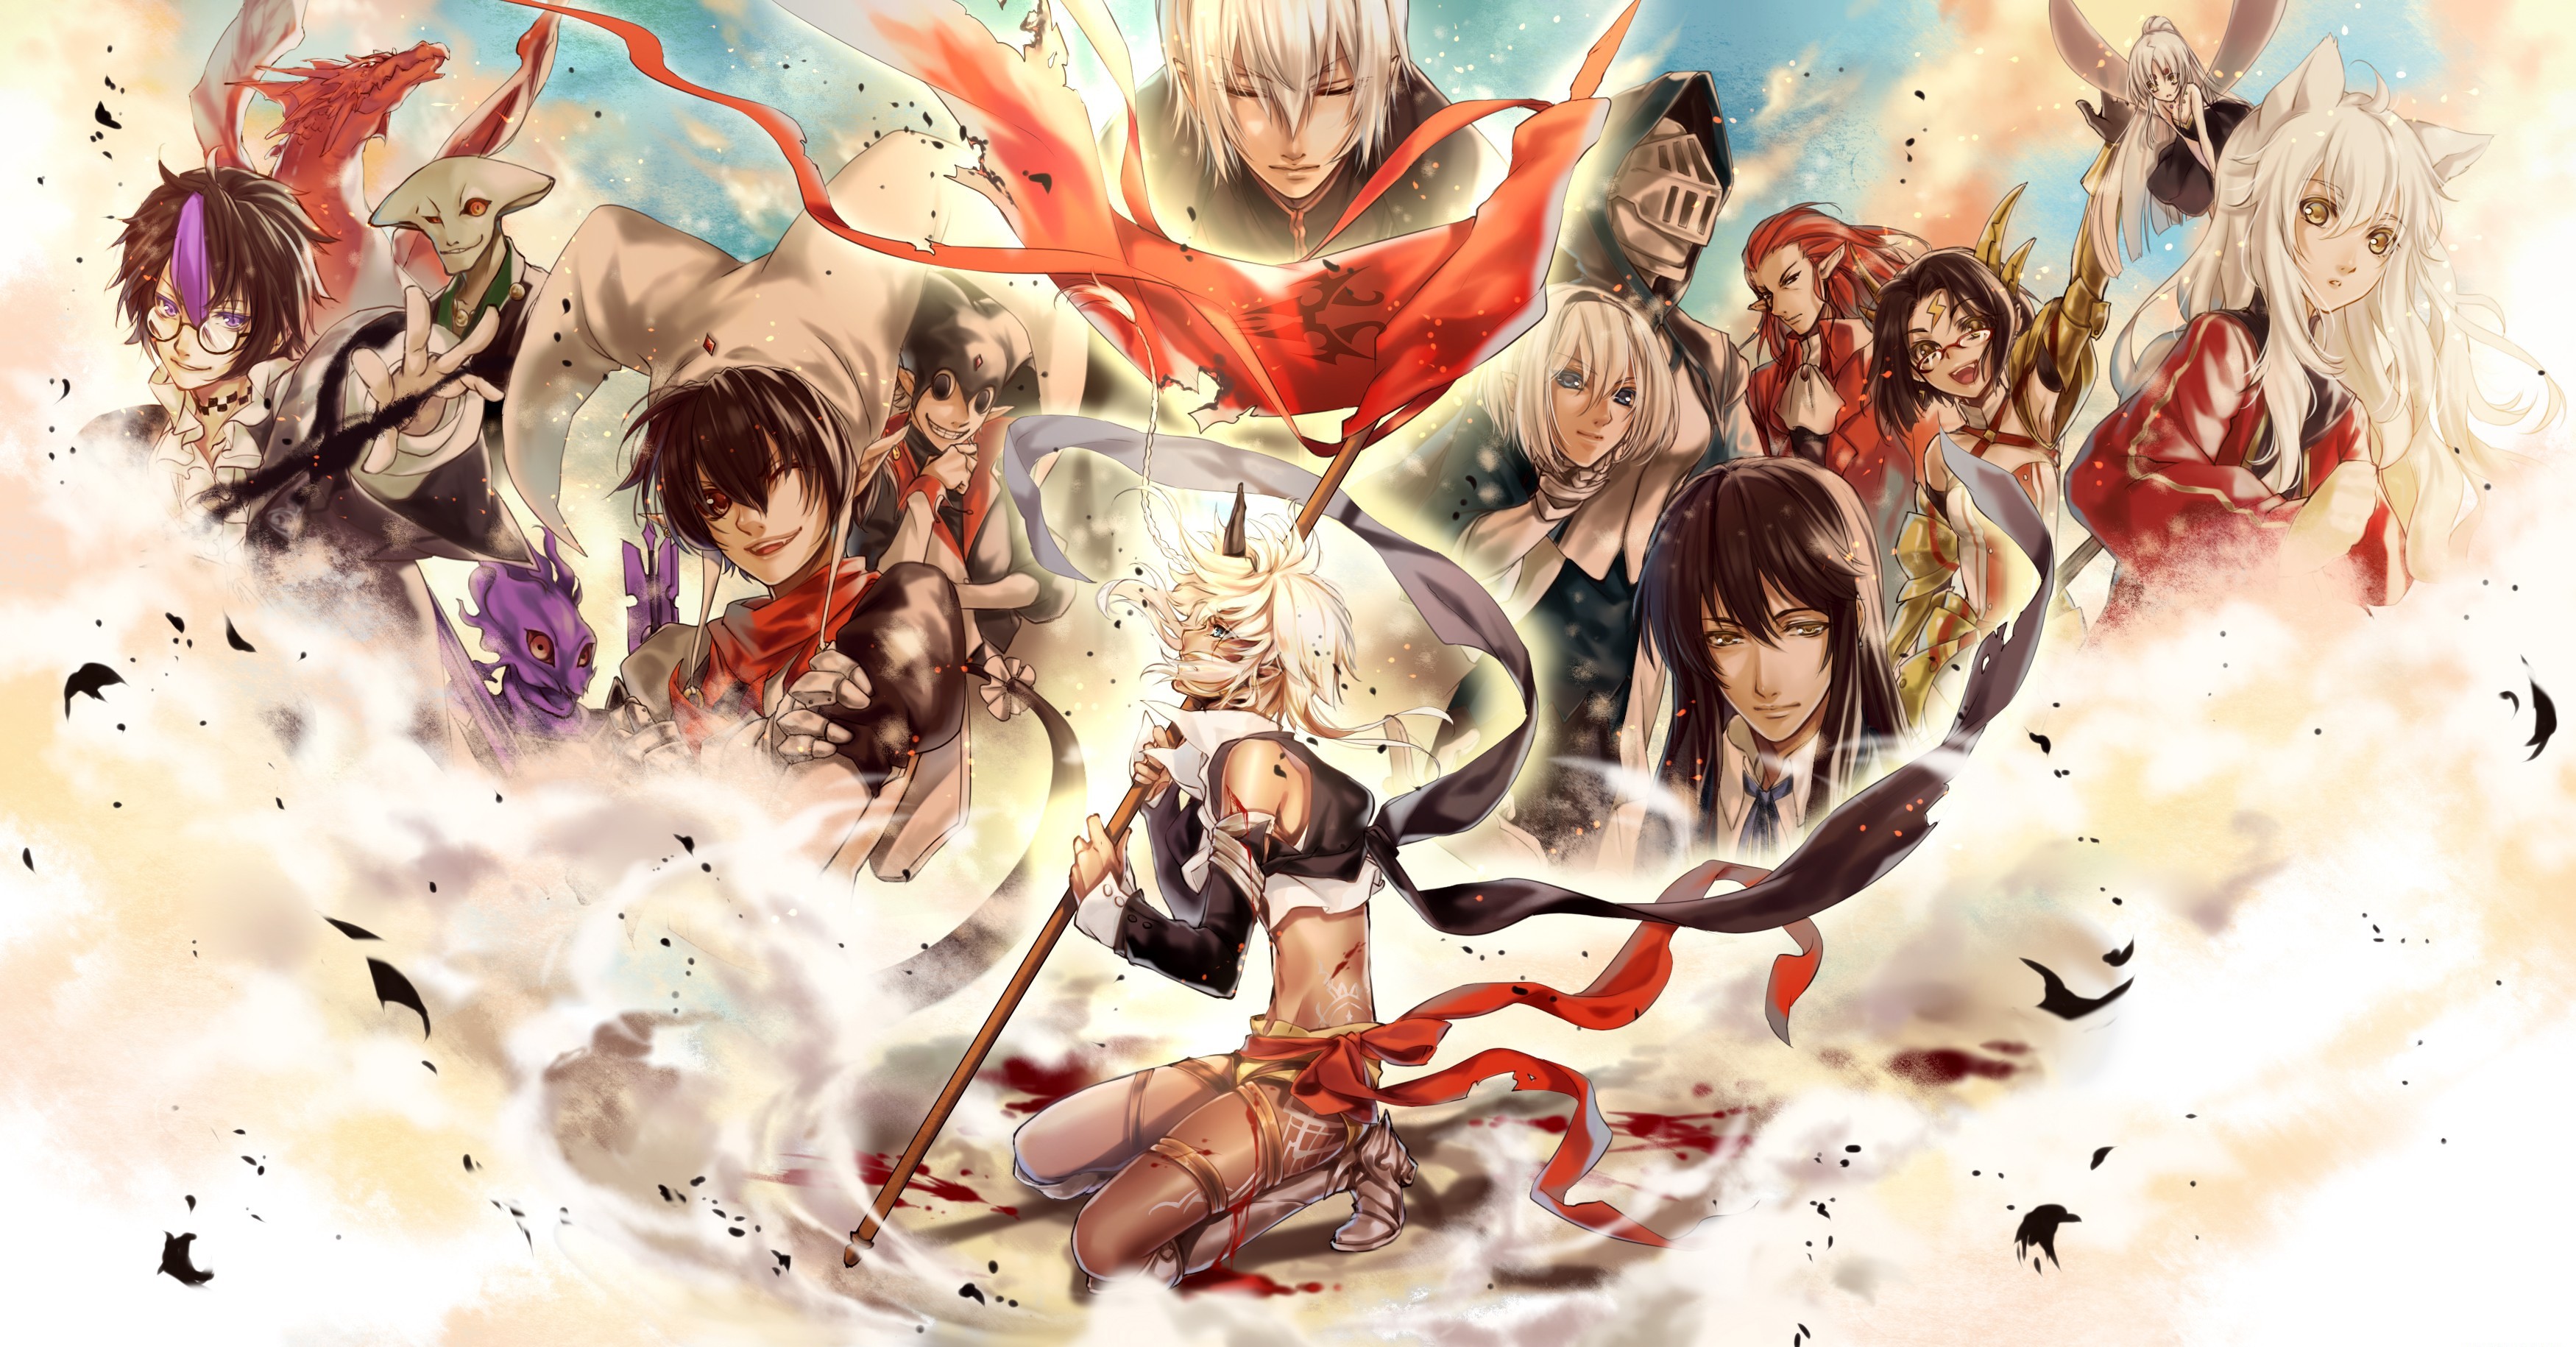 Anime Pixiv Fantasia Fallen Kings HD Wallpaper | Background Image